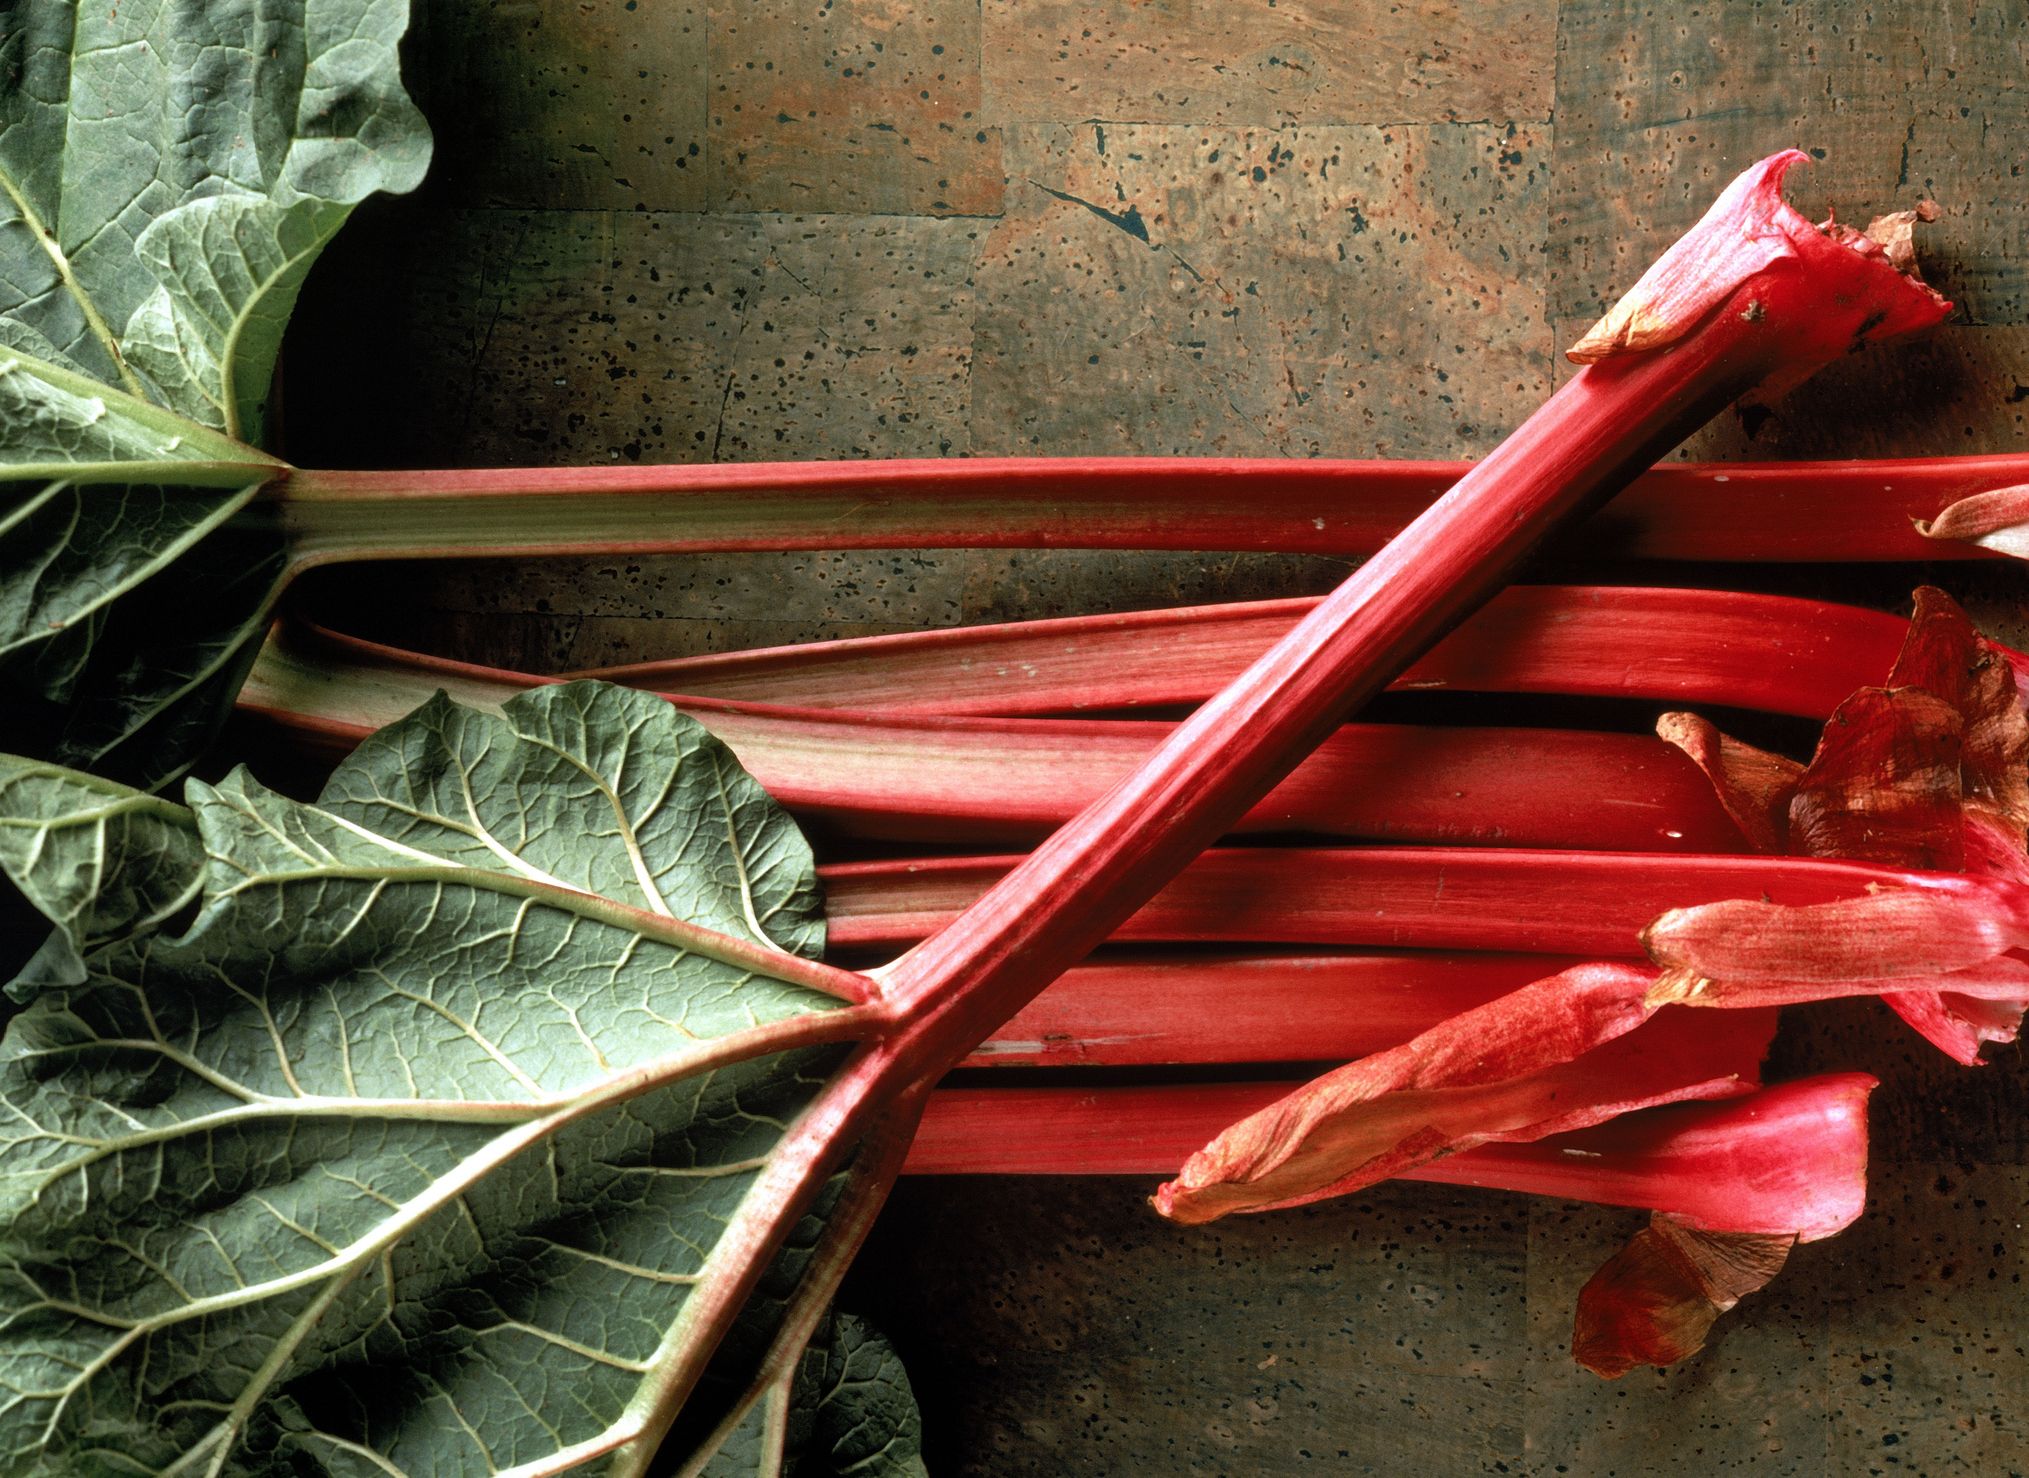 Where to grow forced rhubarb